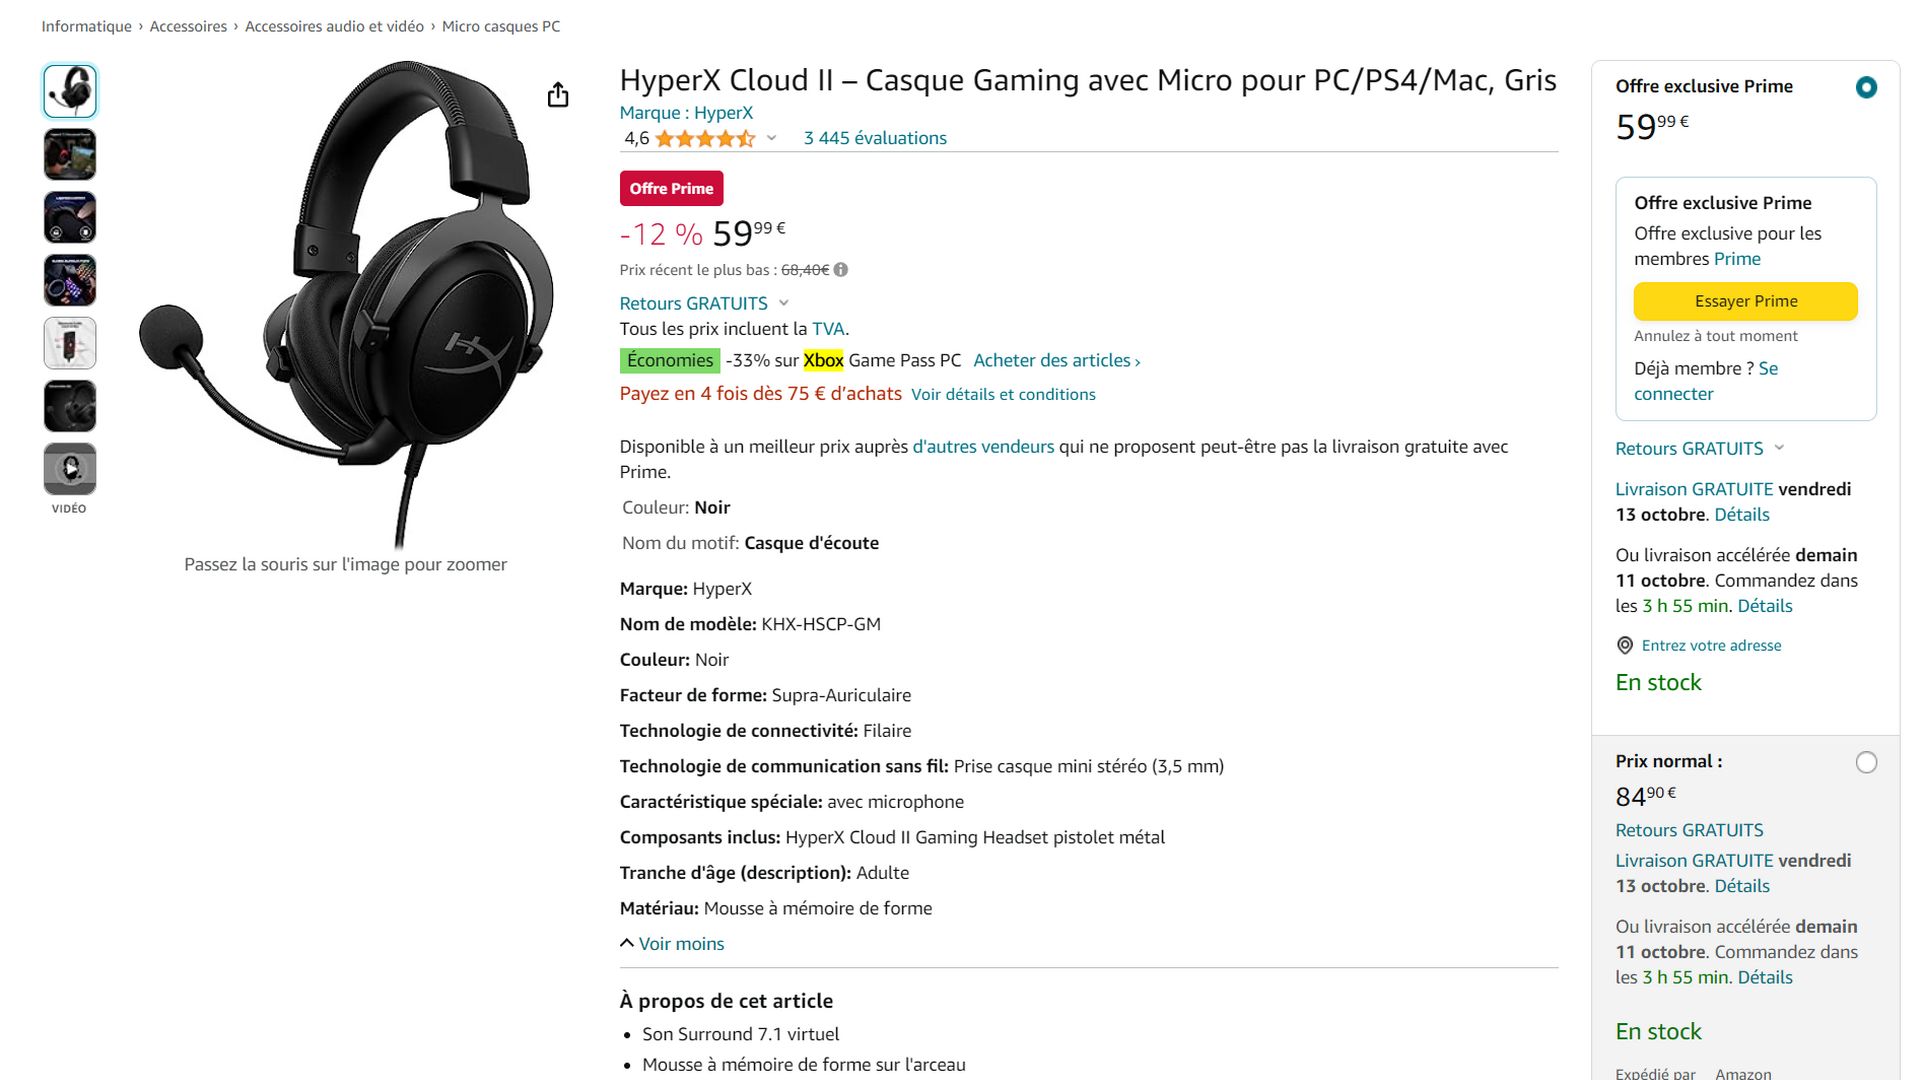 HyperX Cloud II : Le meilleur casque gamer ?